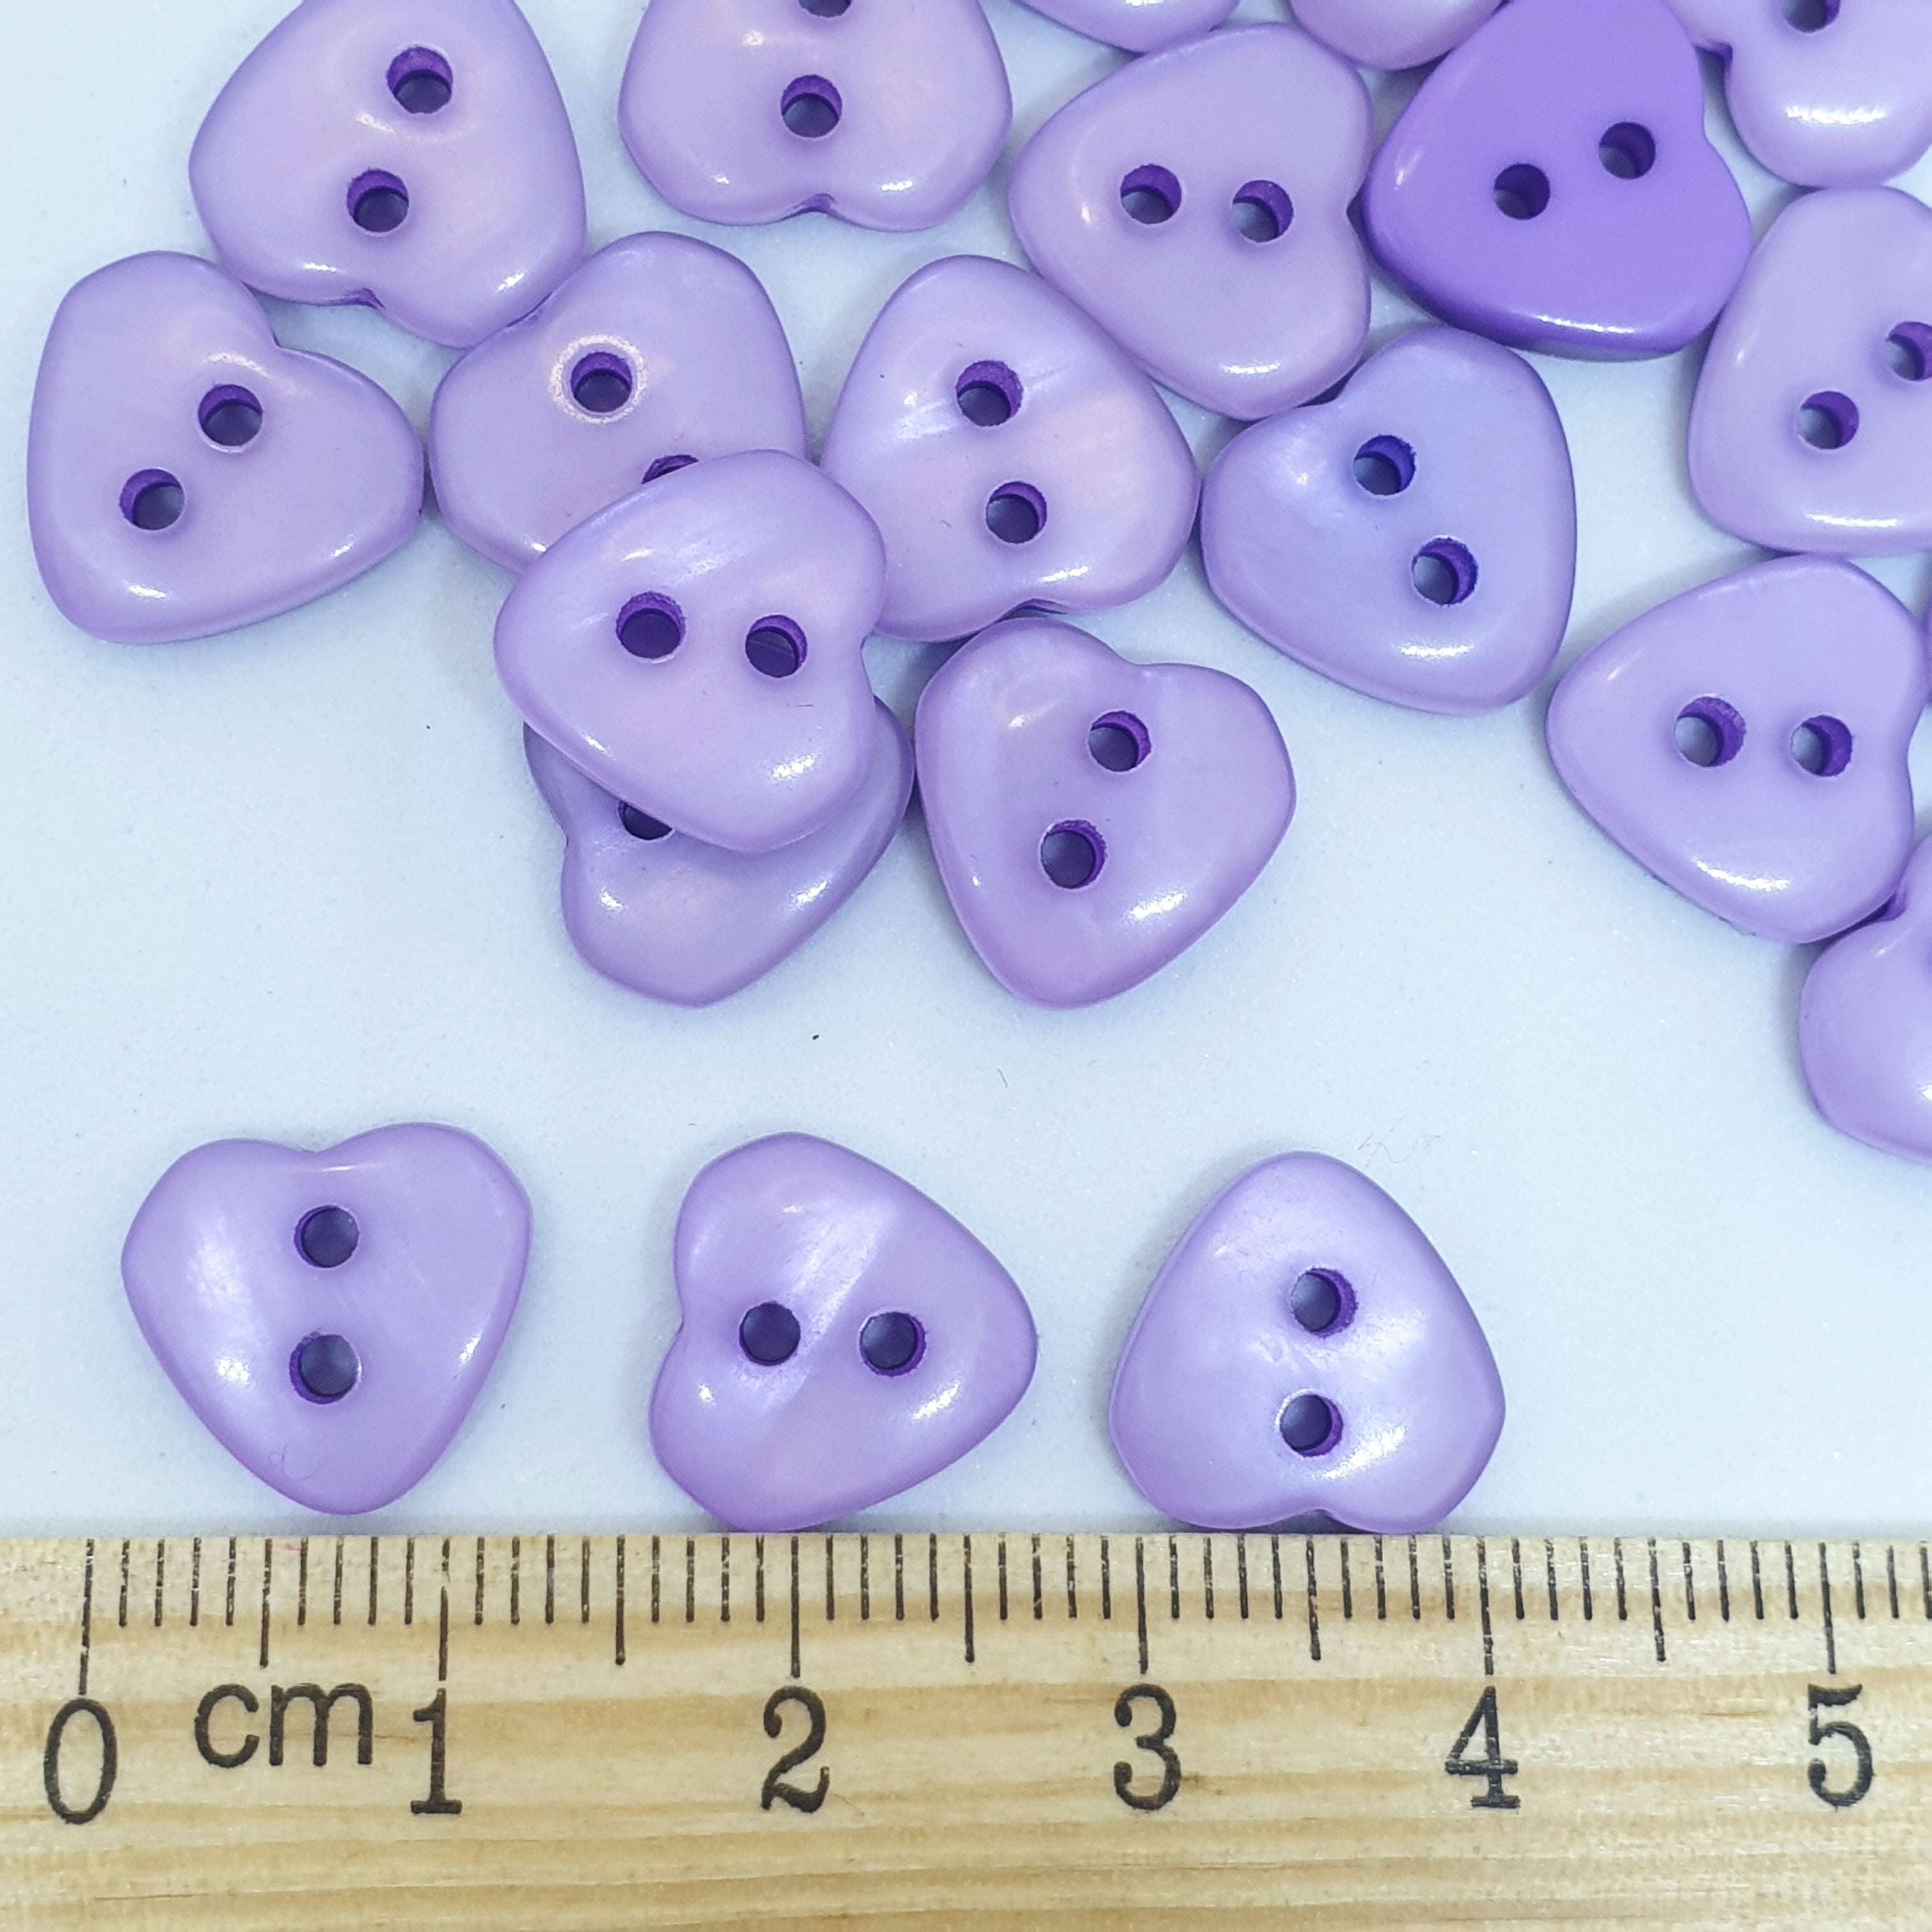 MajorCrafts 40pcs 12mm Light Purple 2 Holes Heart Resin Sewing Buttons